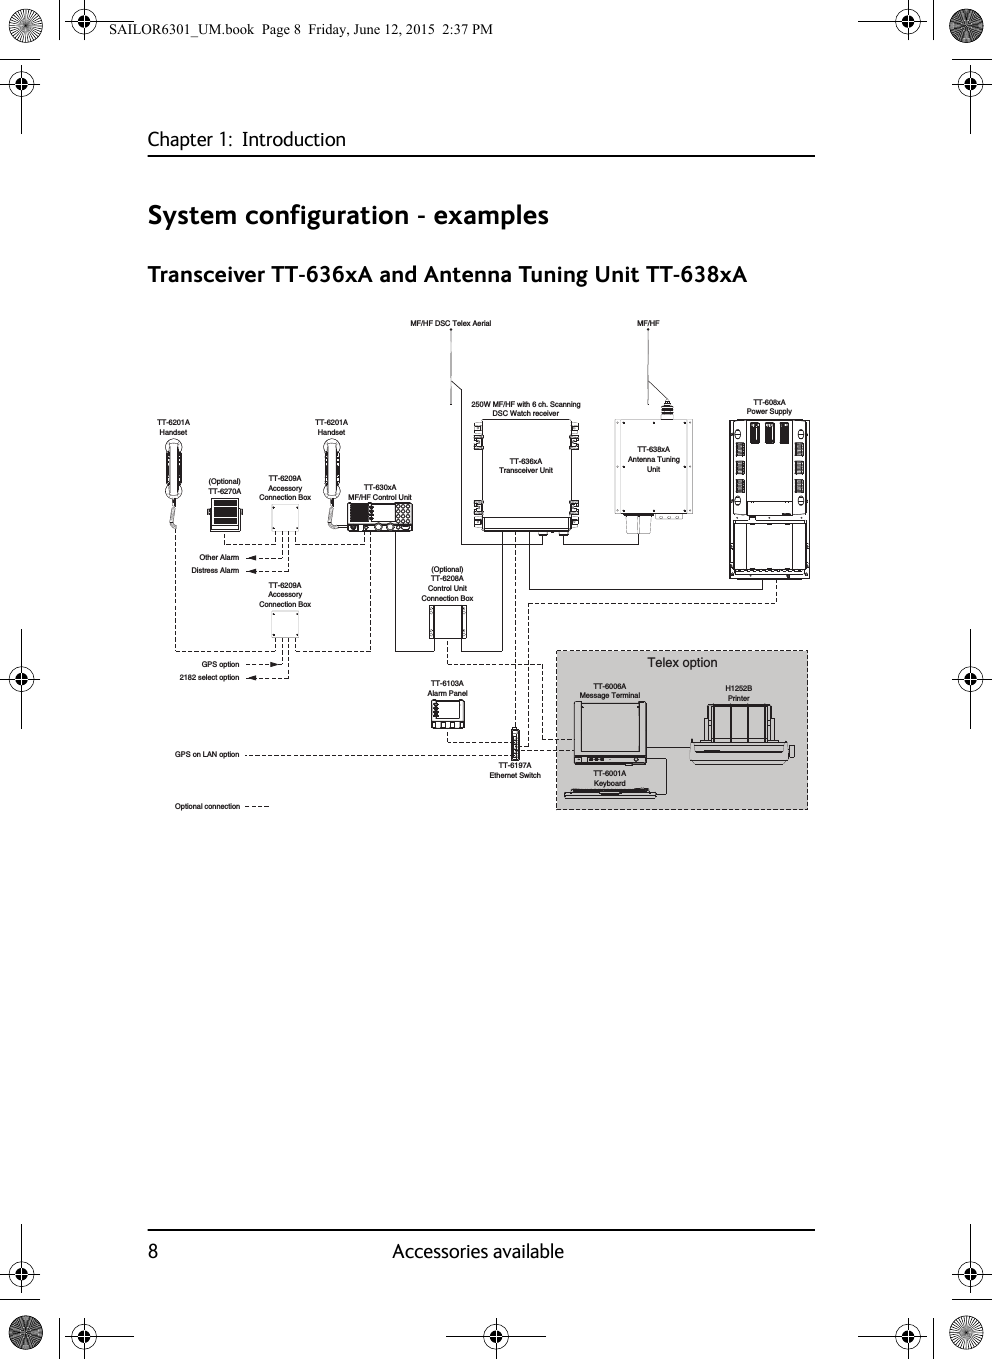 Chapter 1:  Introduction8 Accessories availableSystem configuration - examplesTransceiver TT-636xA and Antenna Tuning Unit TT-638xATT-6209AAccessoryConnection BoxTT-6209AAccessoryConnection BoxUnitAntenna TuningMF/HFHandsetTT-638xAMessage TerminalDSC Watch receiver250W MF/HF with 6 ch. ScanningTT-636xAMF/HF DSC Telex Aerial(Optional)KeyboardMF/HF Control UnitTT-630xAAlarm PanelTT-6103AHandsetGPS option2182 select optionTT-6270APower SupplyTT-608xAConnection BoxControl UnitDistress AlarmOther AlarmTT-6201ATransceiver UnitTT-6201ATT-6208ATT-6001ATT-6006A(Optional)Ethernet SwitchTT-6197AGPS on LAN optionOptional connectionTelex optionPrinterH1252BSAILOR6301_UM.book  Page 8  Friday, June 12, 2015  2:37 PM